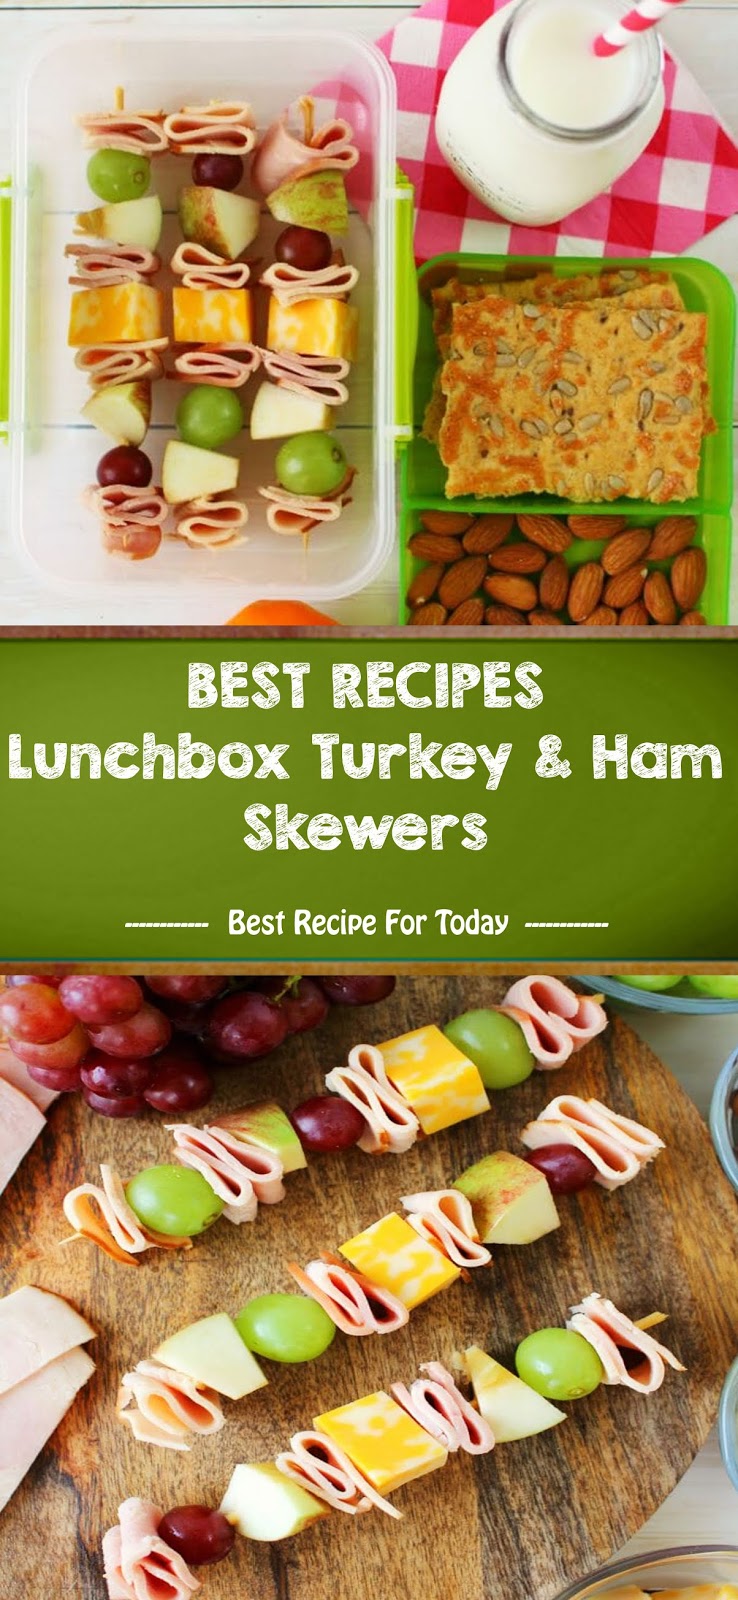 BEST RECIPES Lunchbox Turkey & Ham Skewers | Healthyrecipes-04